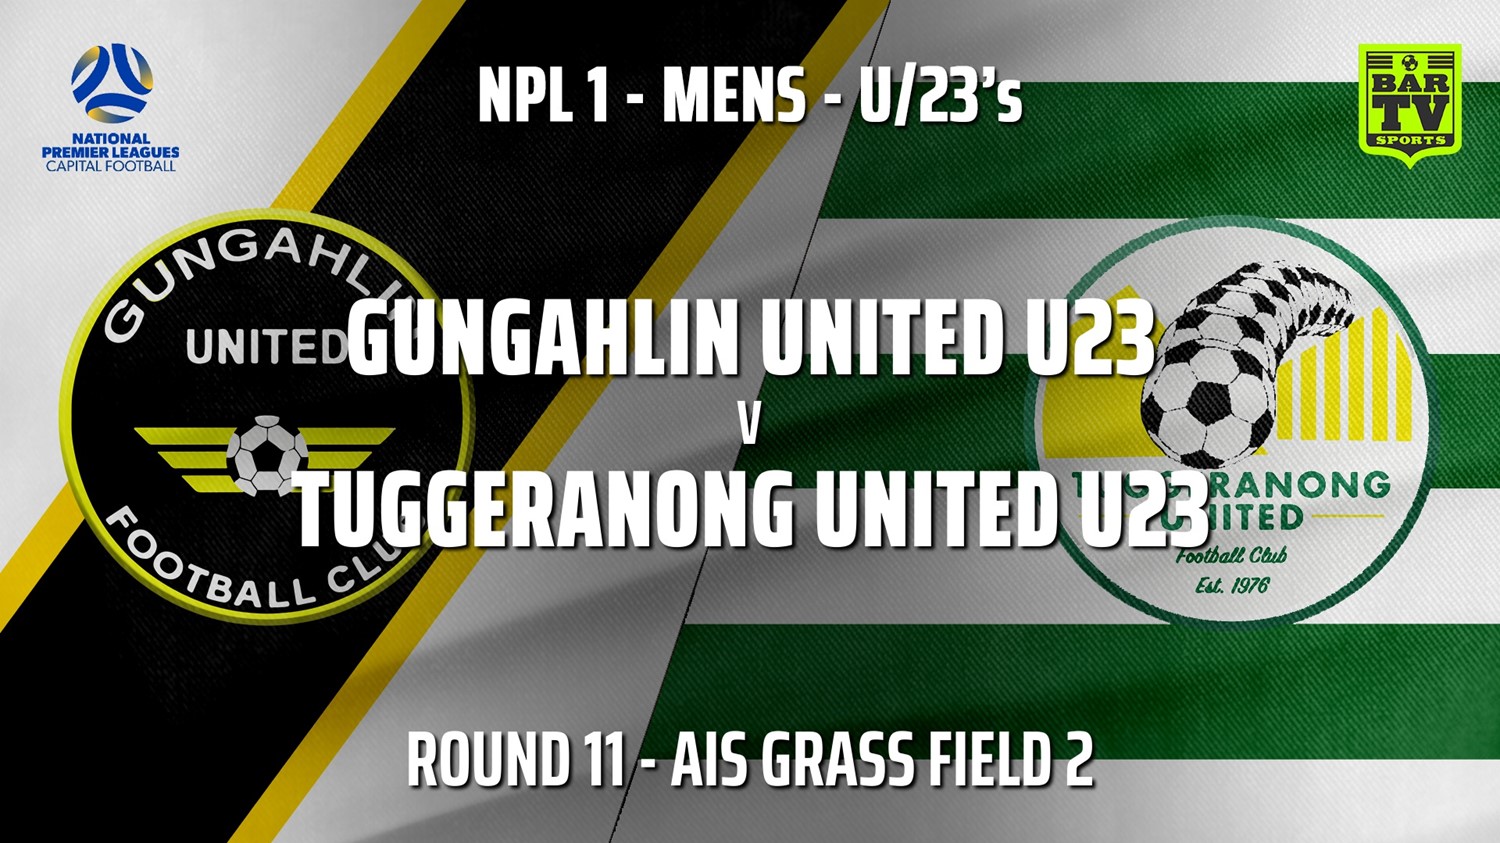 210627-Capital NPL U23 Round 11 - Gungahlin United U23 v Tuggeranong United U23 Minigame Slate Image